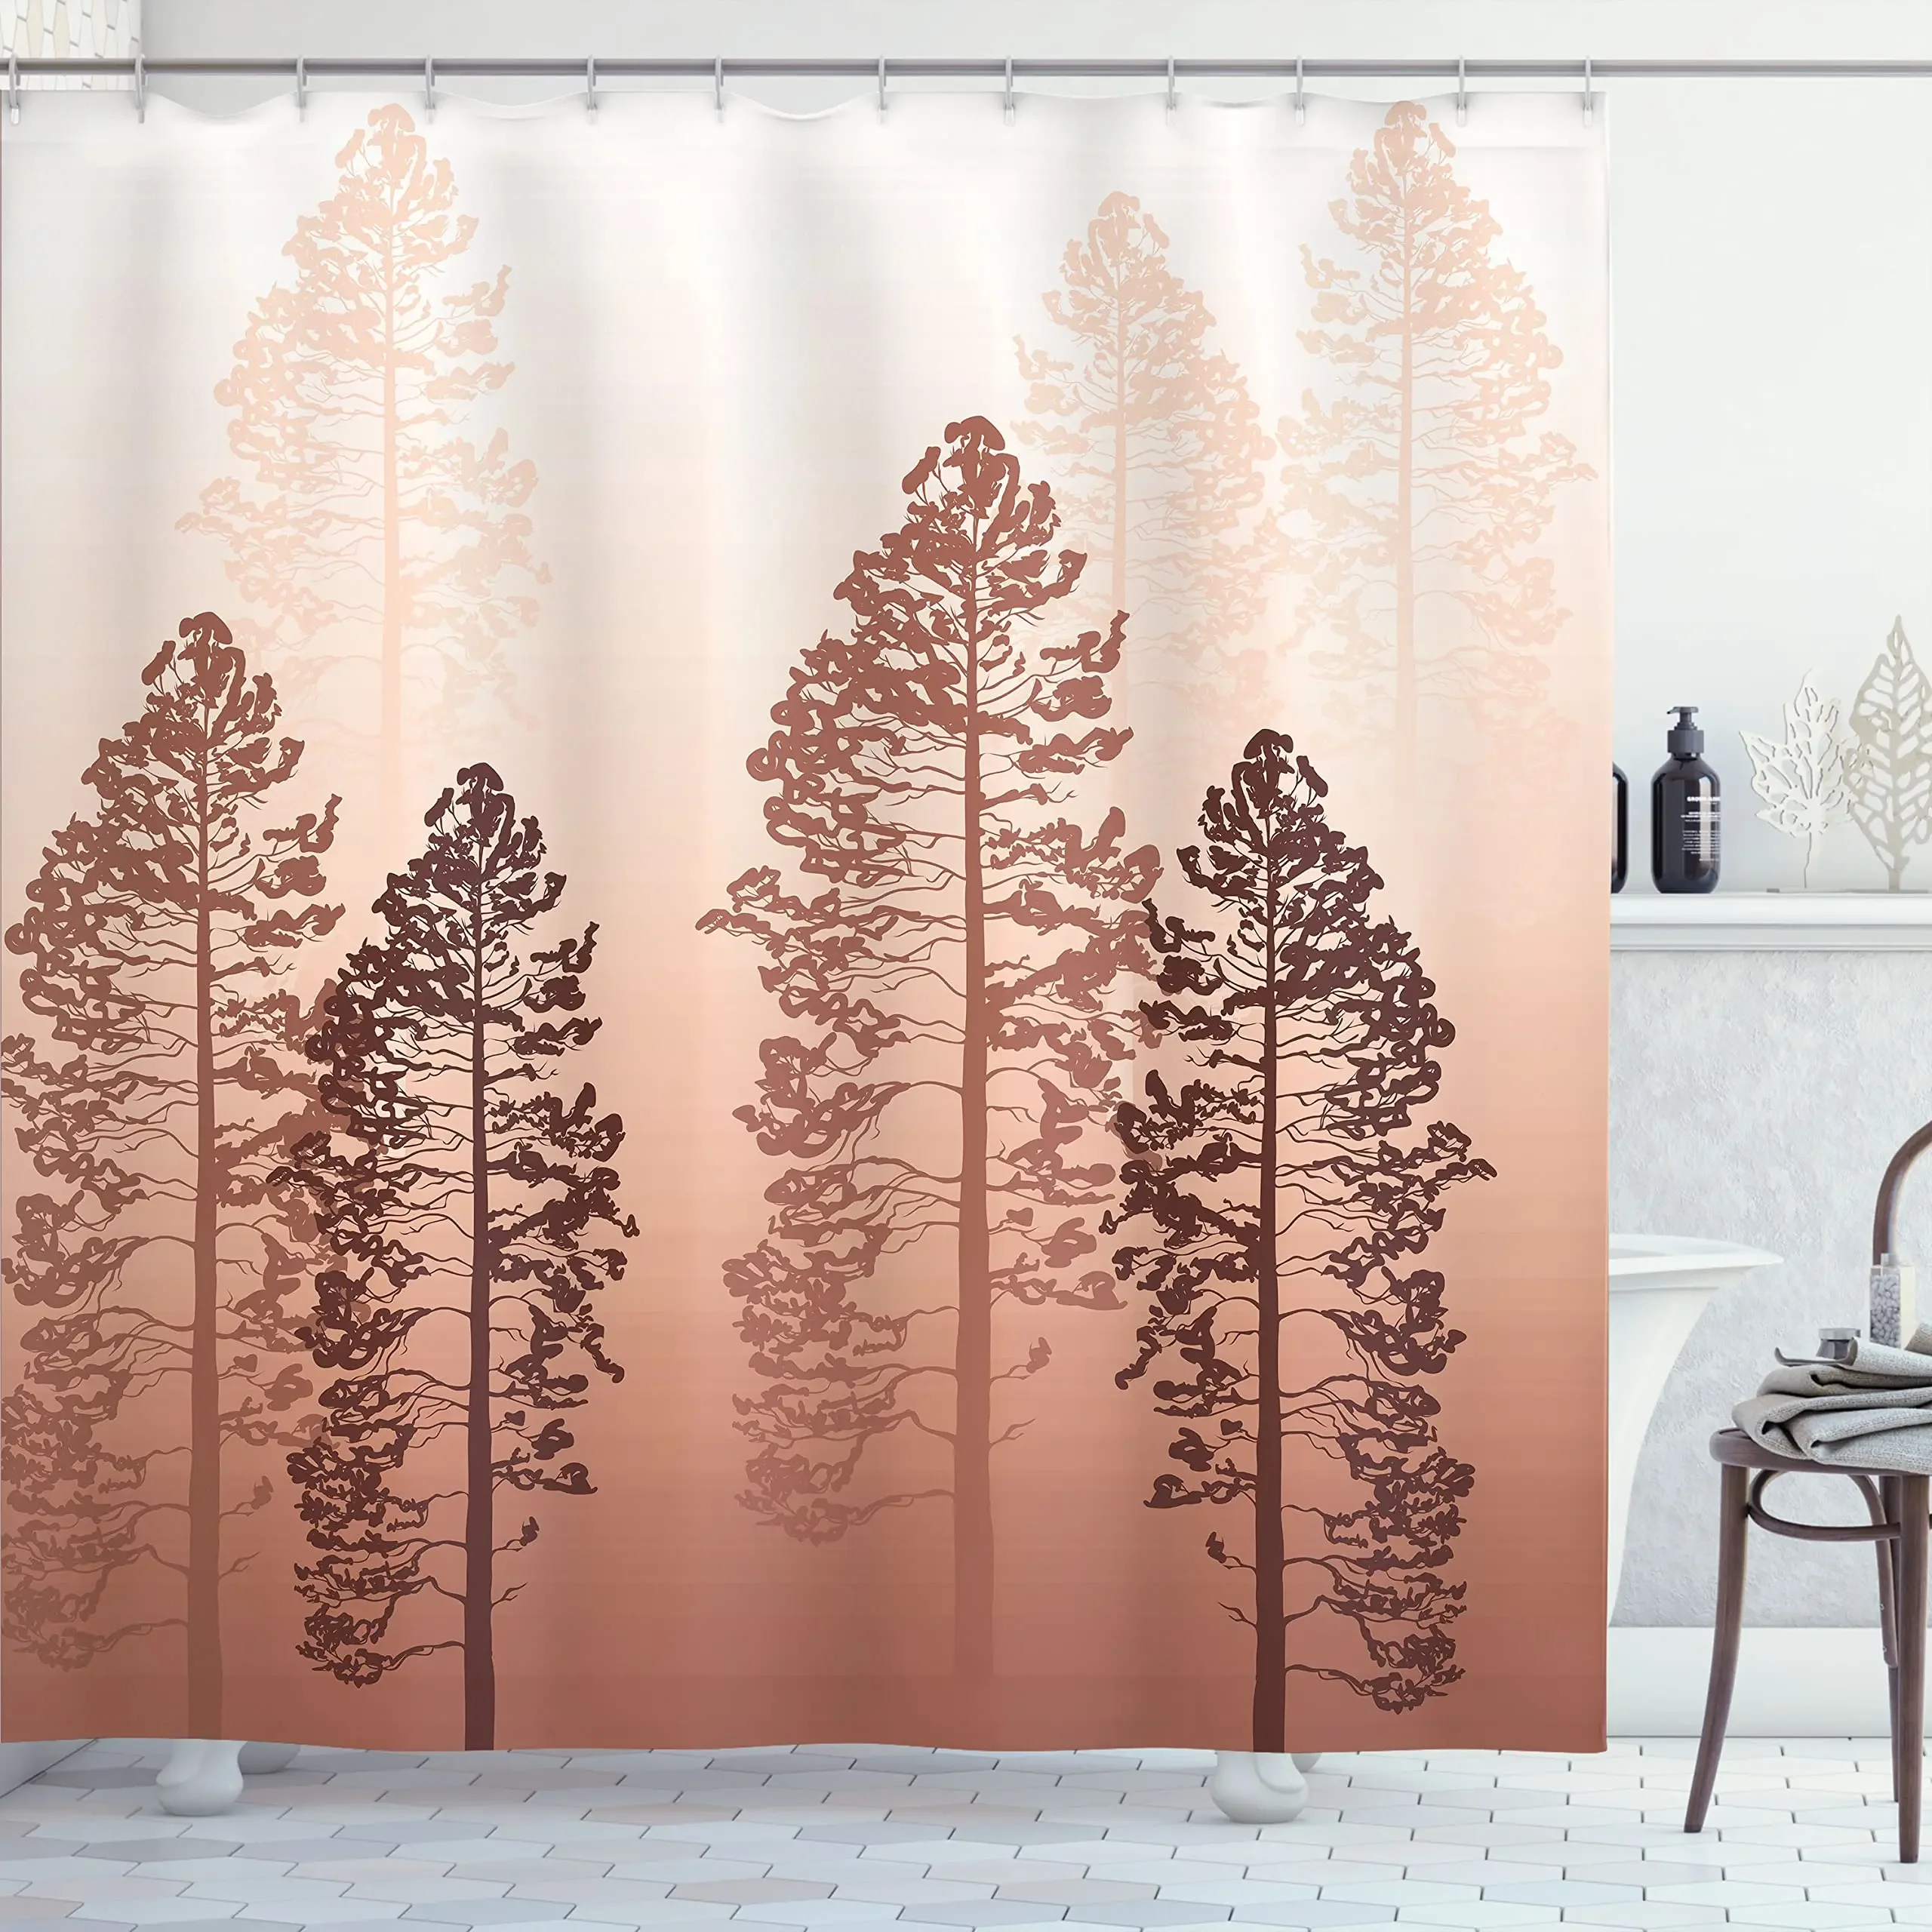 

Country Shower Curtain,Pine Trees In The Forest on Foggy Wildlife Adventure Artwork,Cloth Fabric Bathroom Decor Set Bath Screens